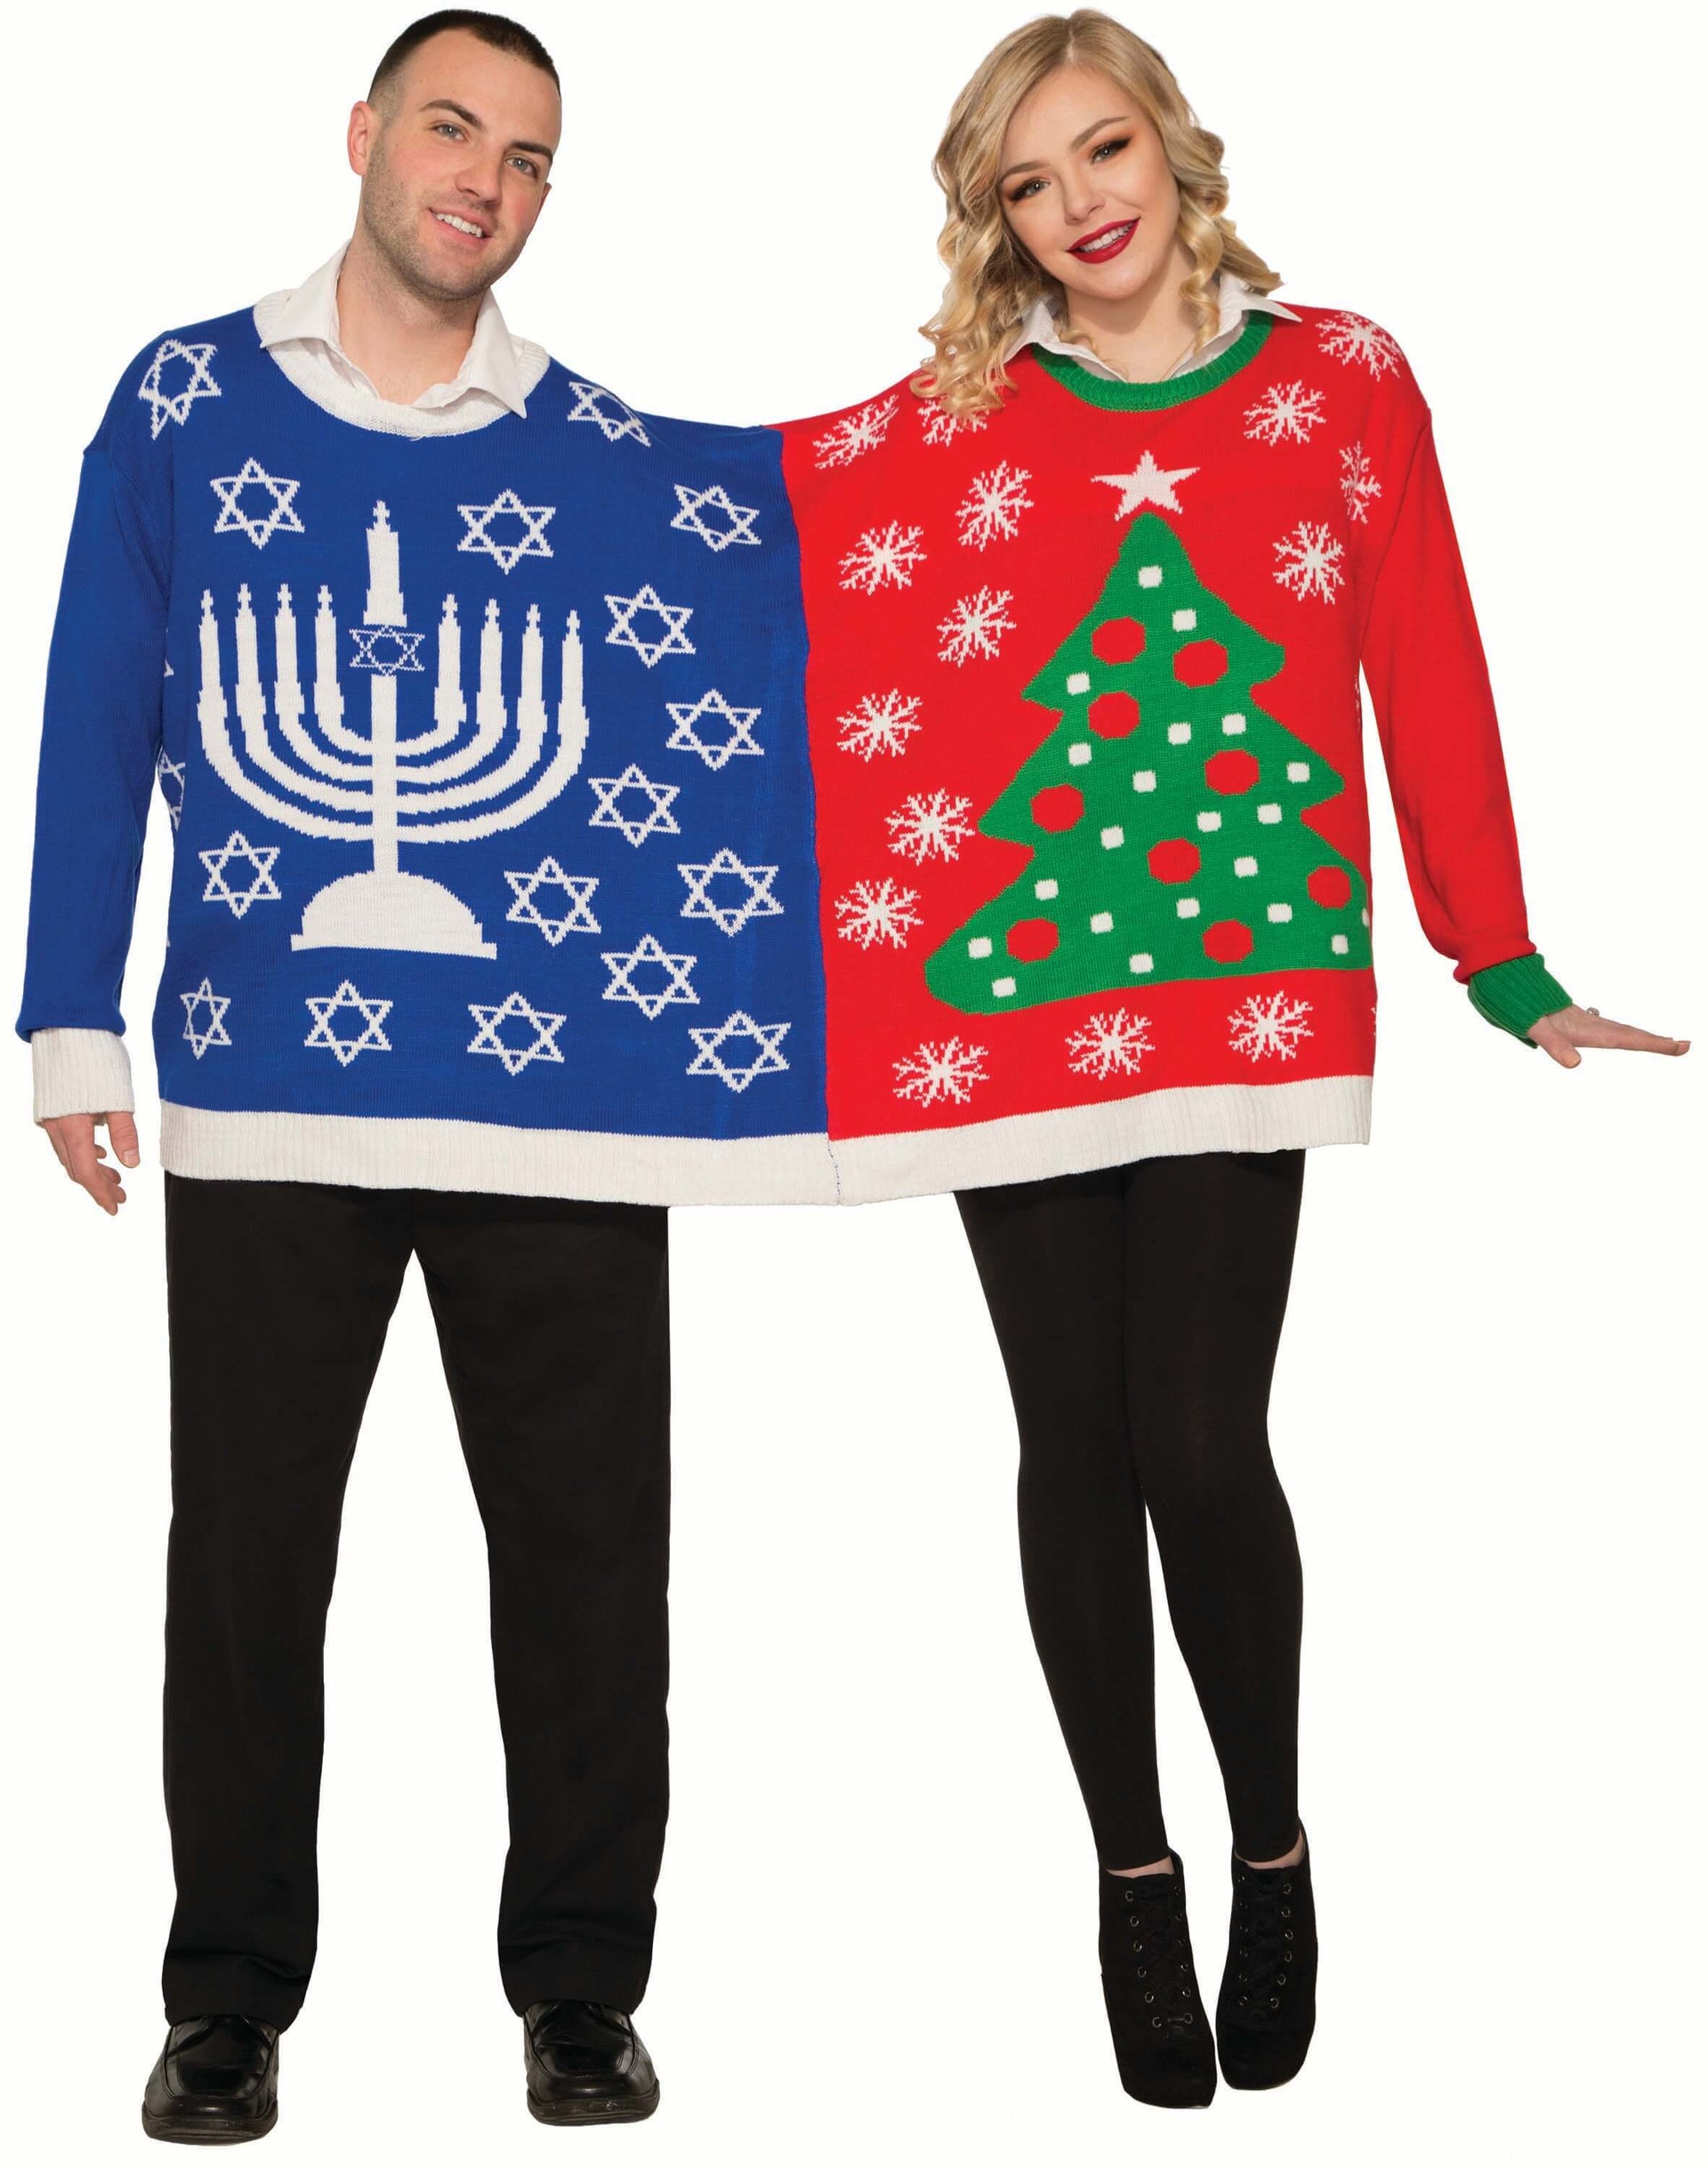 Forum Novelties Sweaters Chrismukkah Ugly Hanukkah Christmas Sweater for Two - Unisex